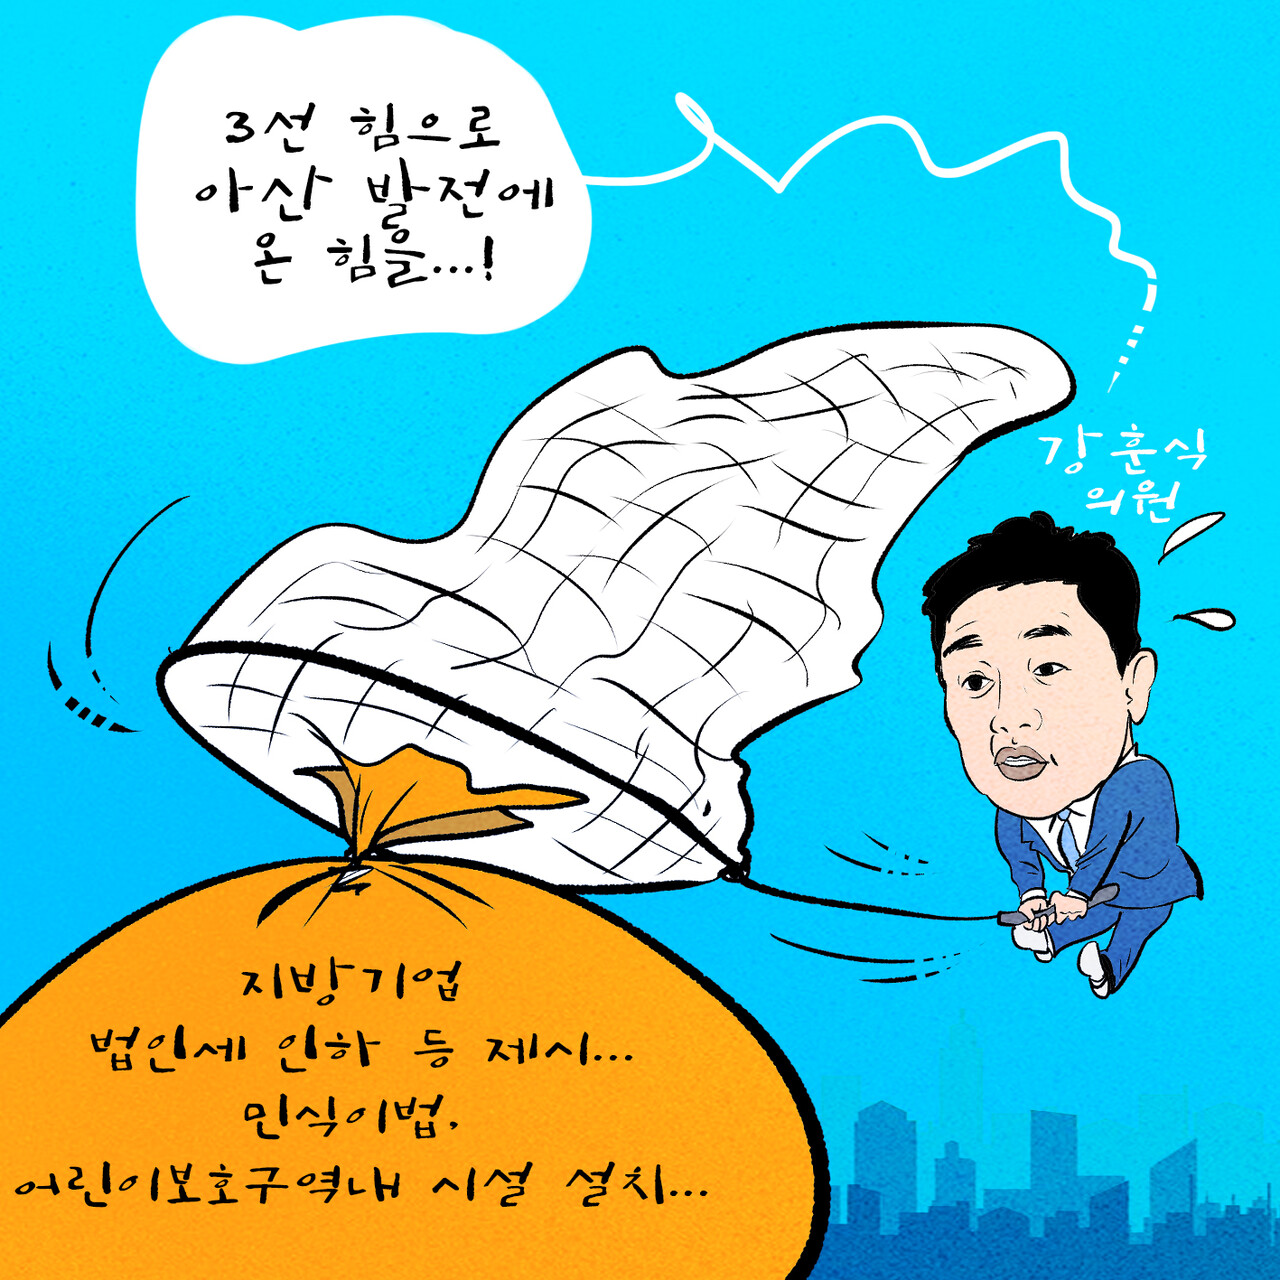 [CNN tv 만평] 강훈식 의원 "3선 힘으로...아산 발전에 온 힘"